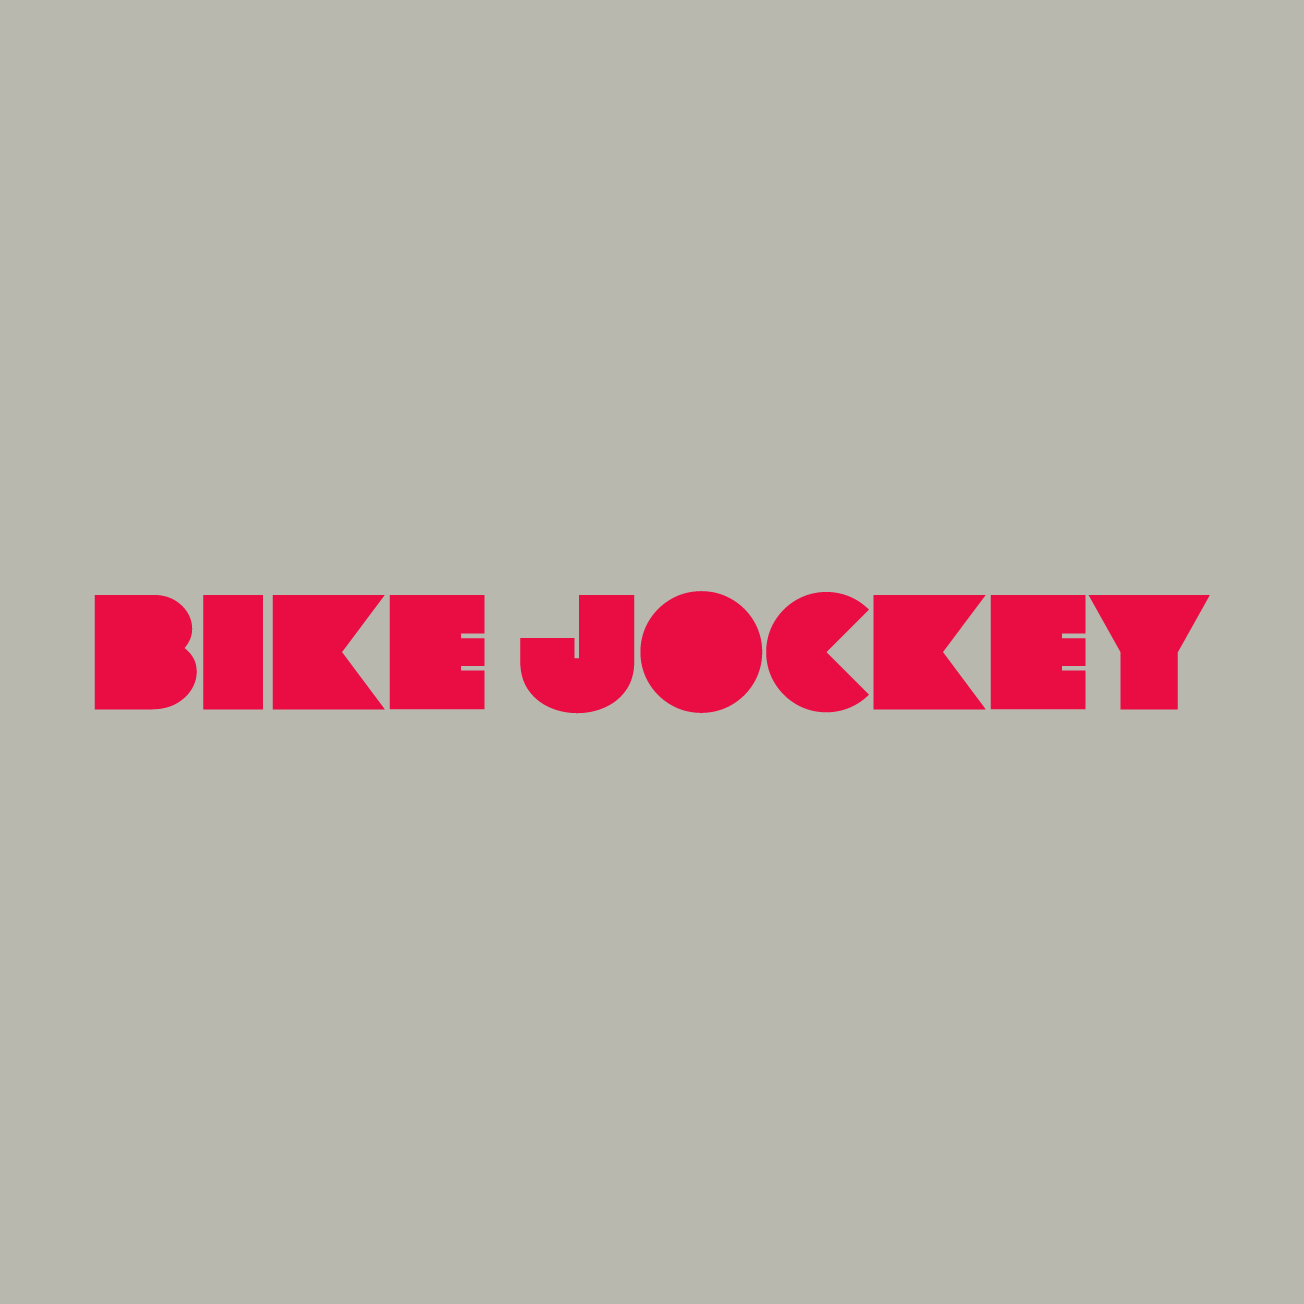 Club Image for BIKE JOCKEY